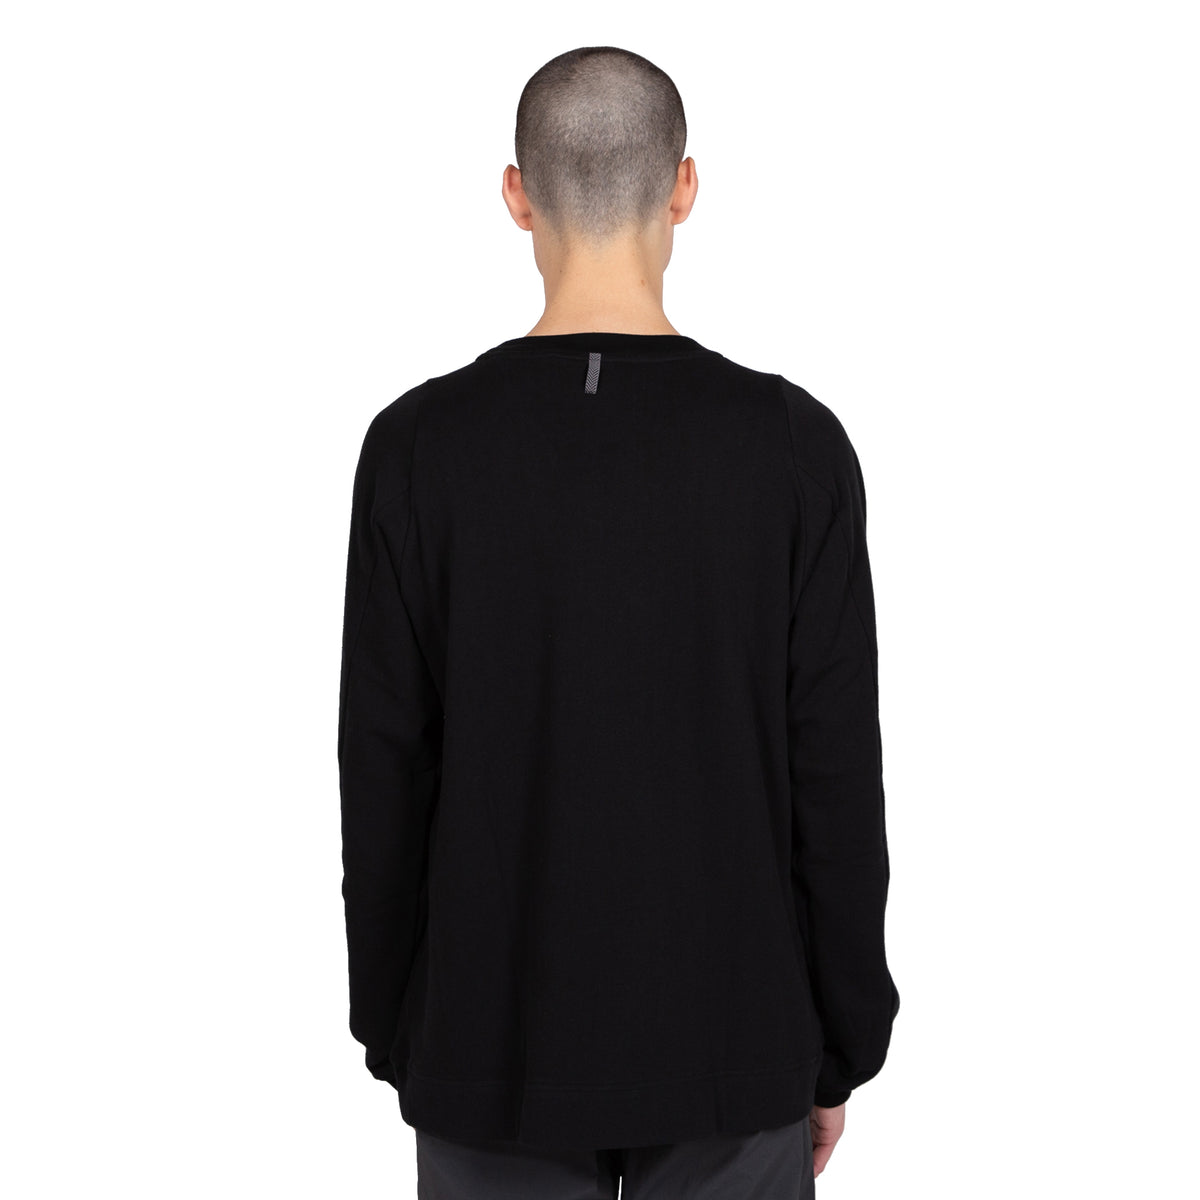 Goldwin Crewneck Sweatshirt in Black sweater